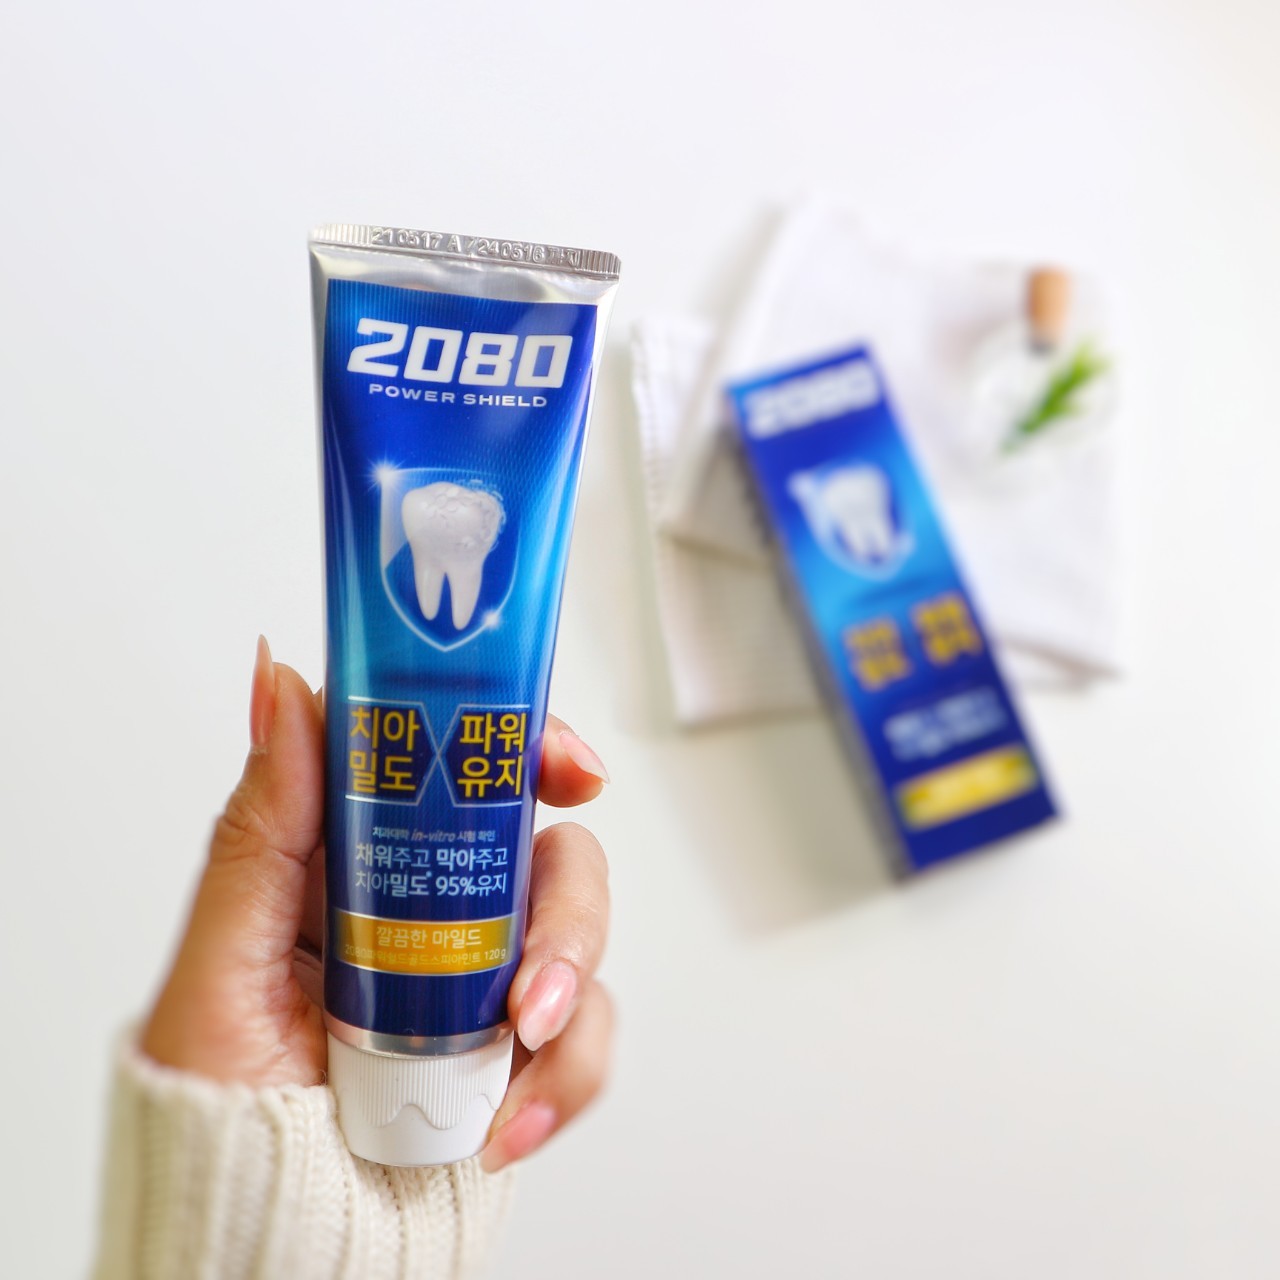 2080 Power Shield Gold Spear Mint 120g ยาสีฟันขายดีของเกาหลี ให้ฟันแข็งแรง ขาวสะอาด ลดกลิ่นปาก คราบหินปูนและคราบพลัค มีสารฟลูออไรด์ป้องกันฟันผุ